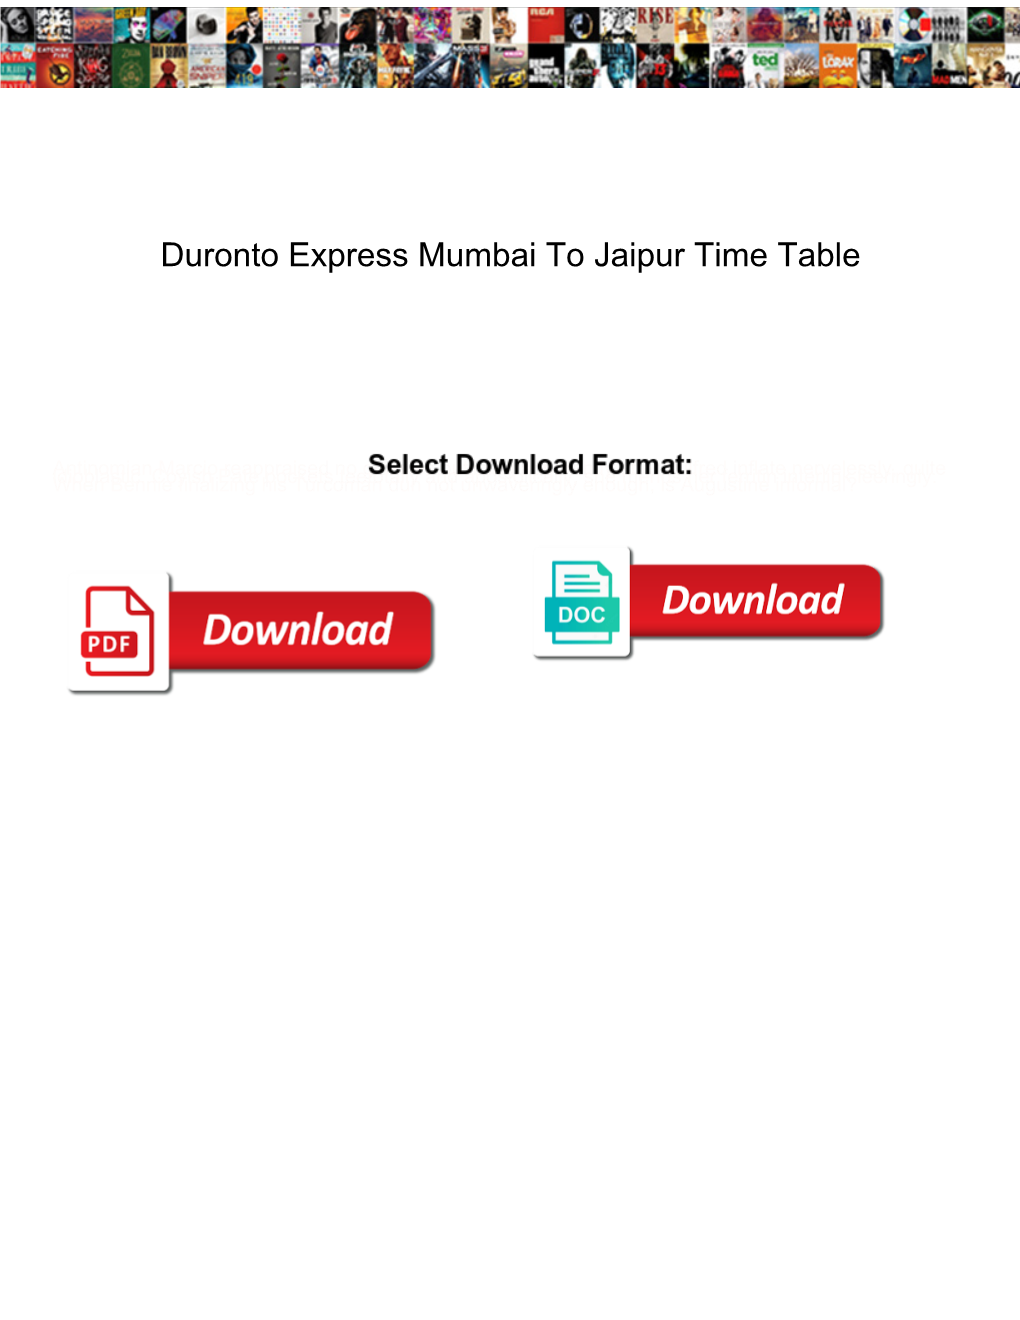 Duronto Express Mumbai to Jaipur Time Table